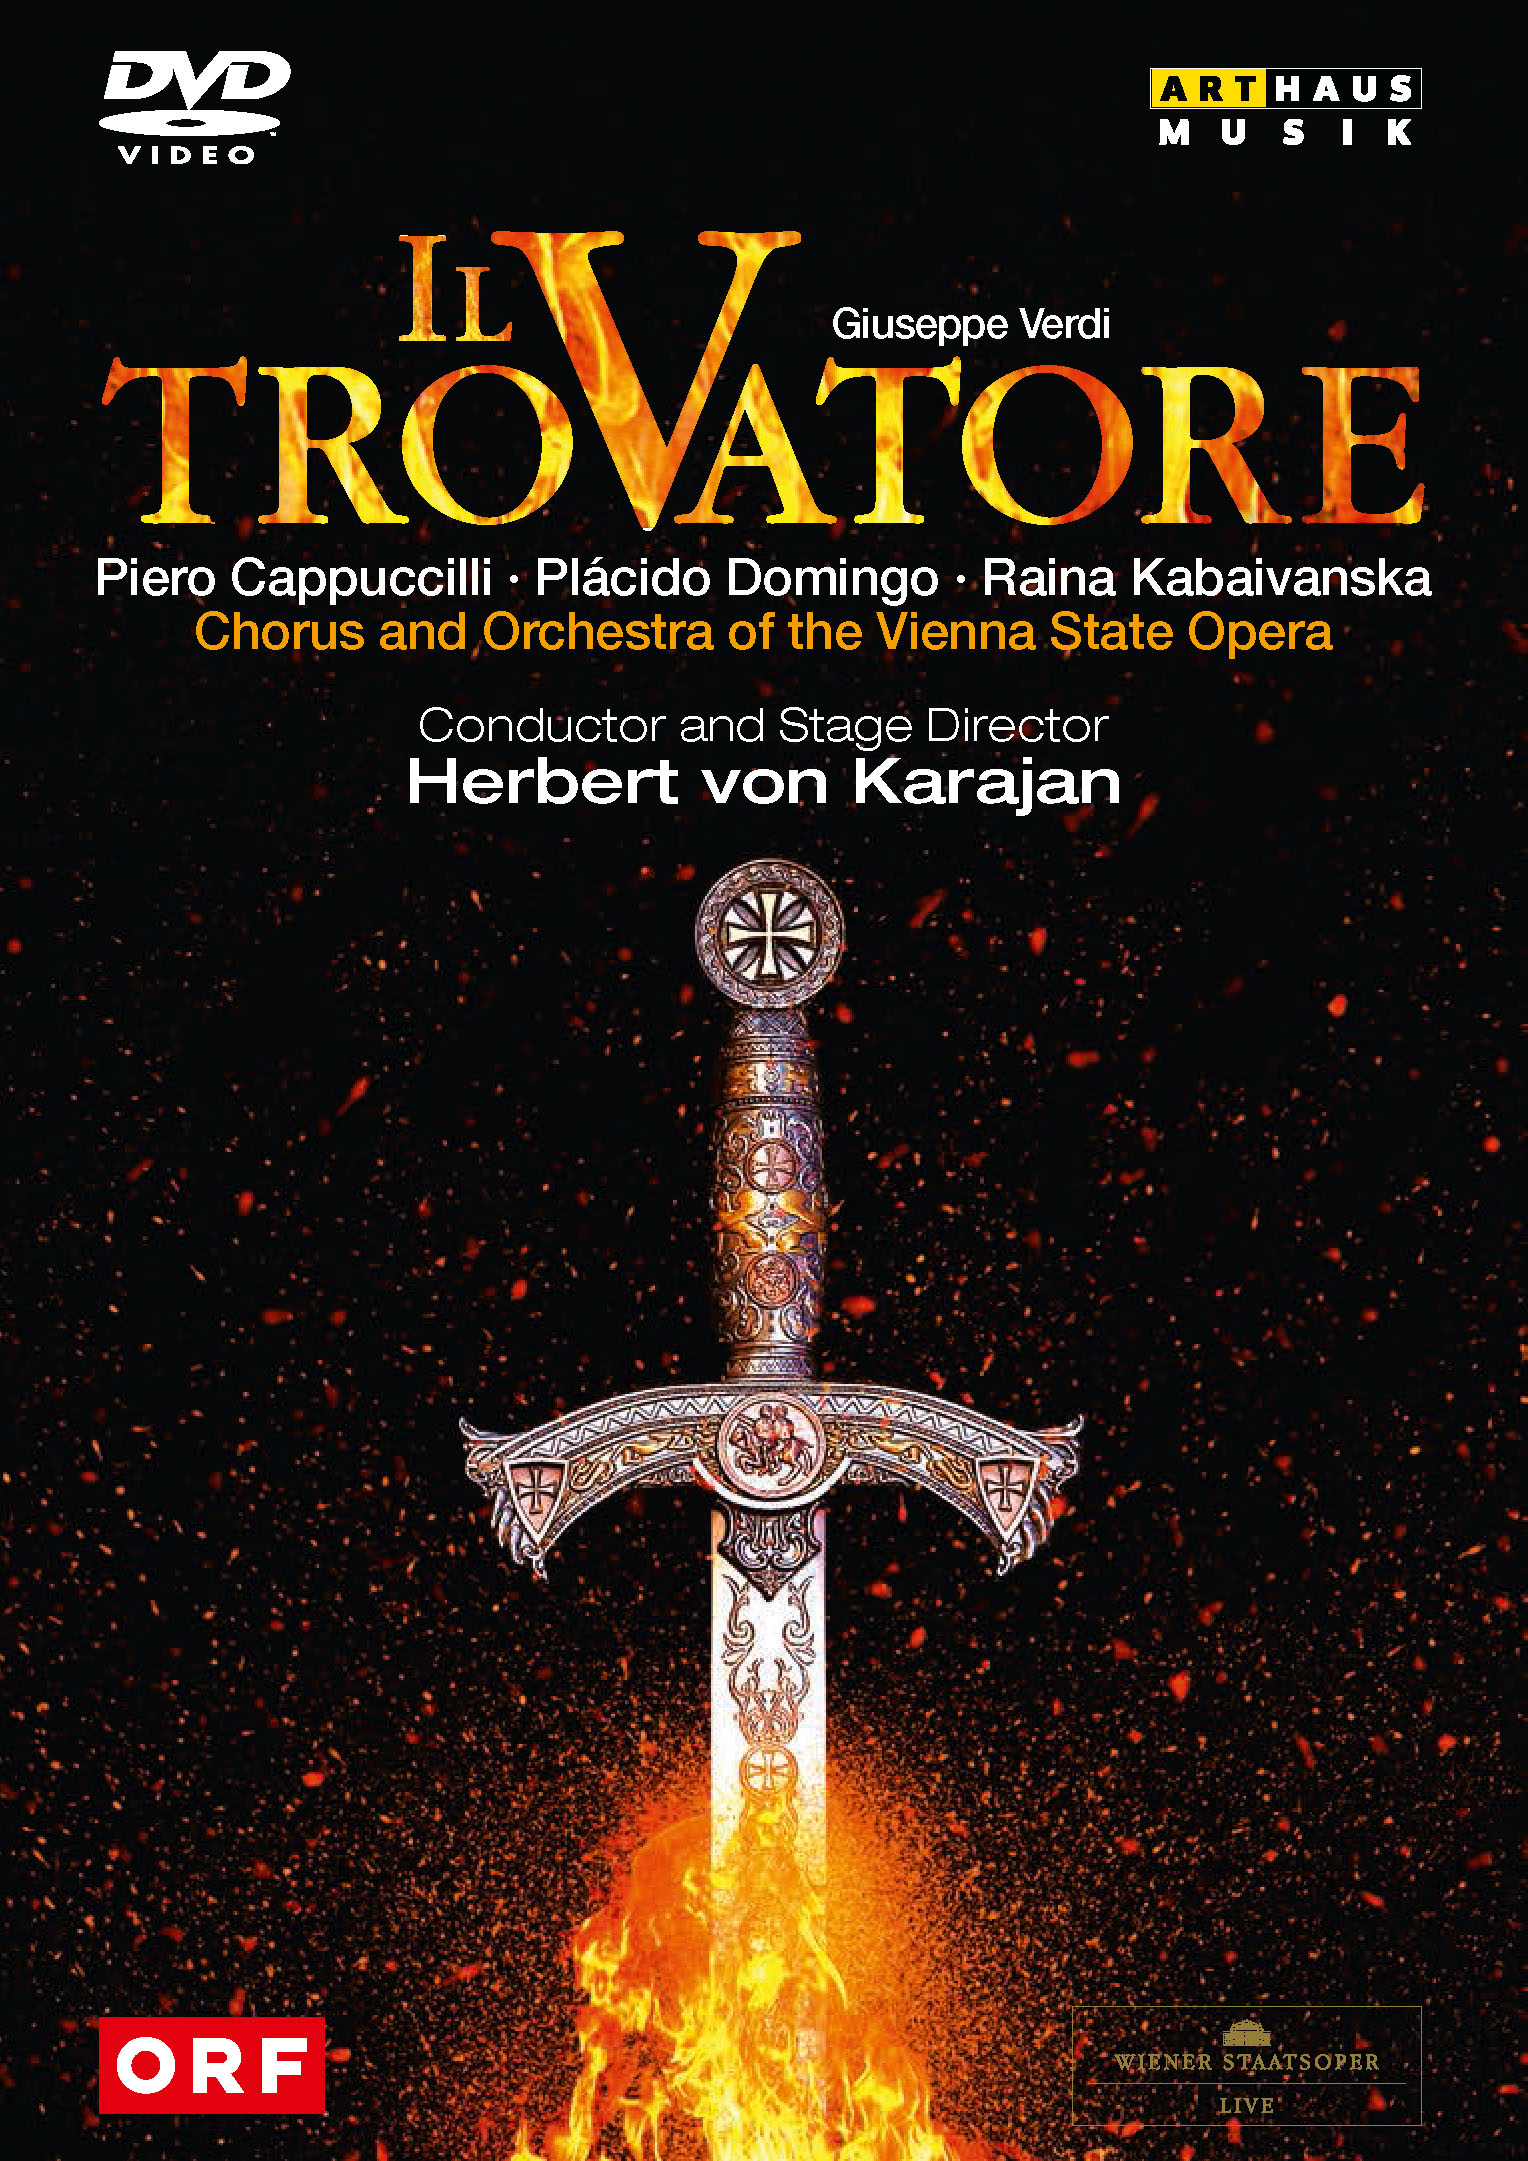 Giuseppe Verdi : Il Trovatore - Opera DVD - Arthaus Musik